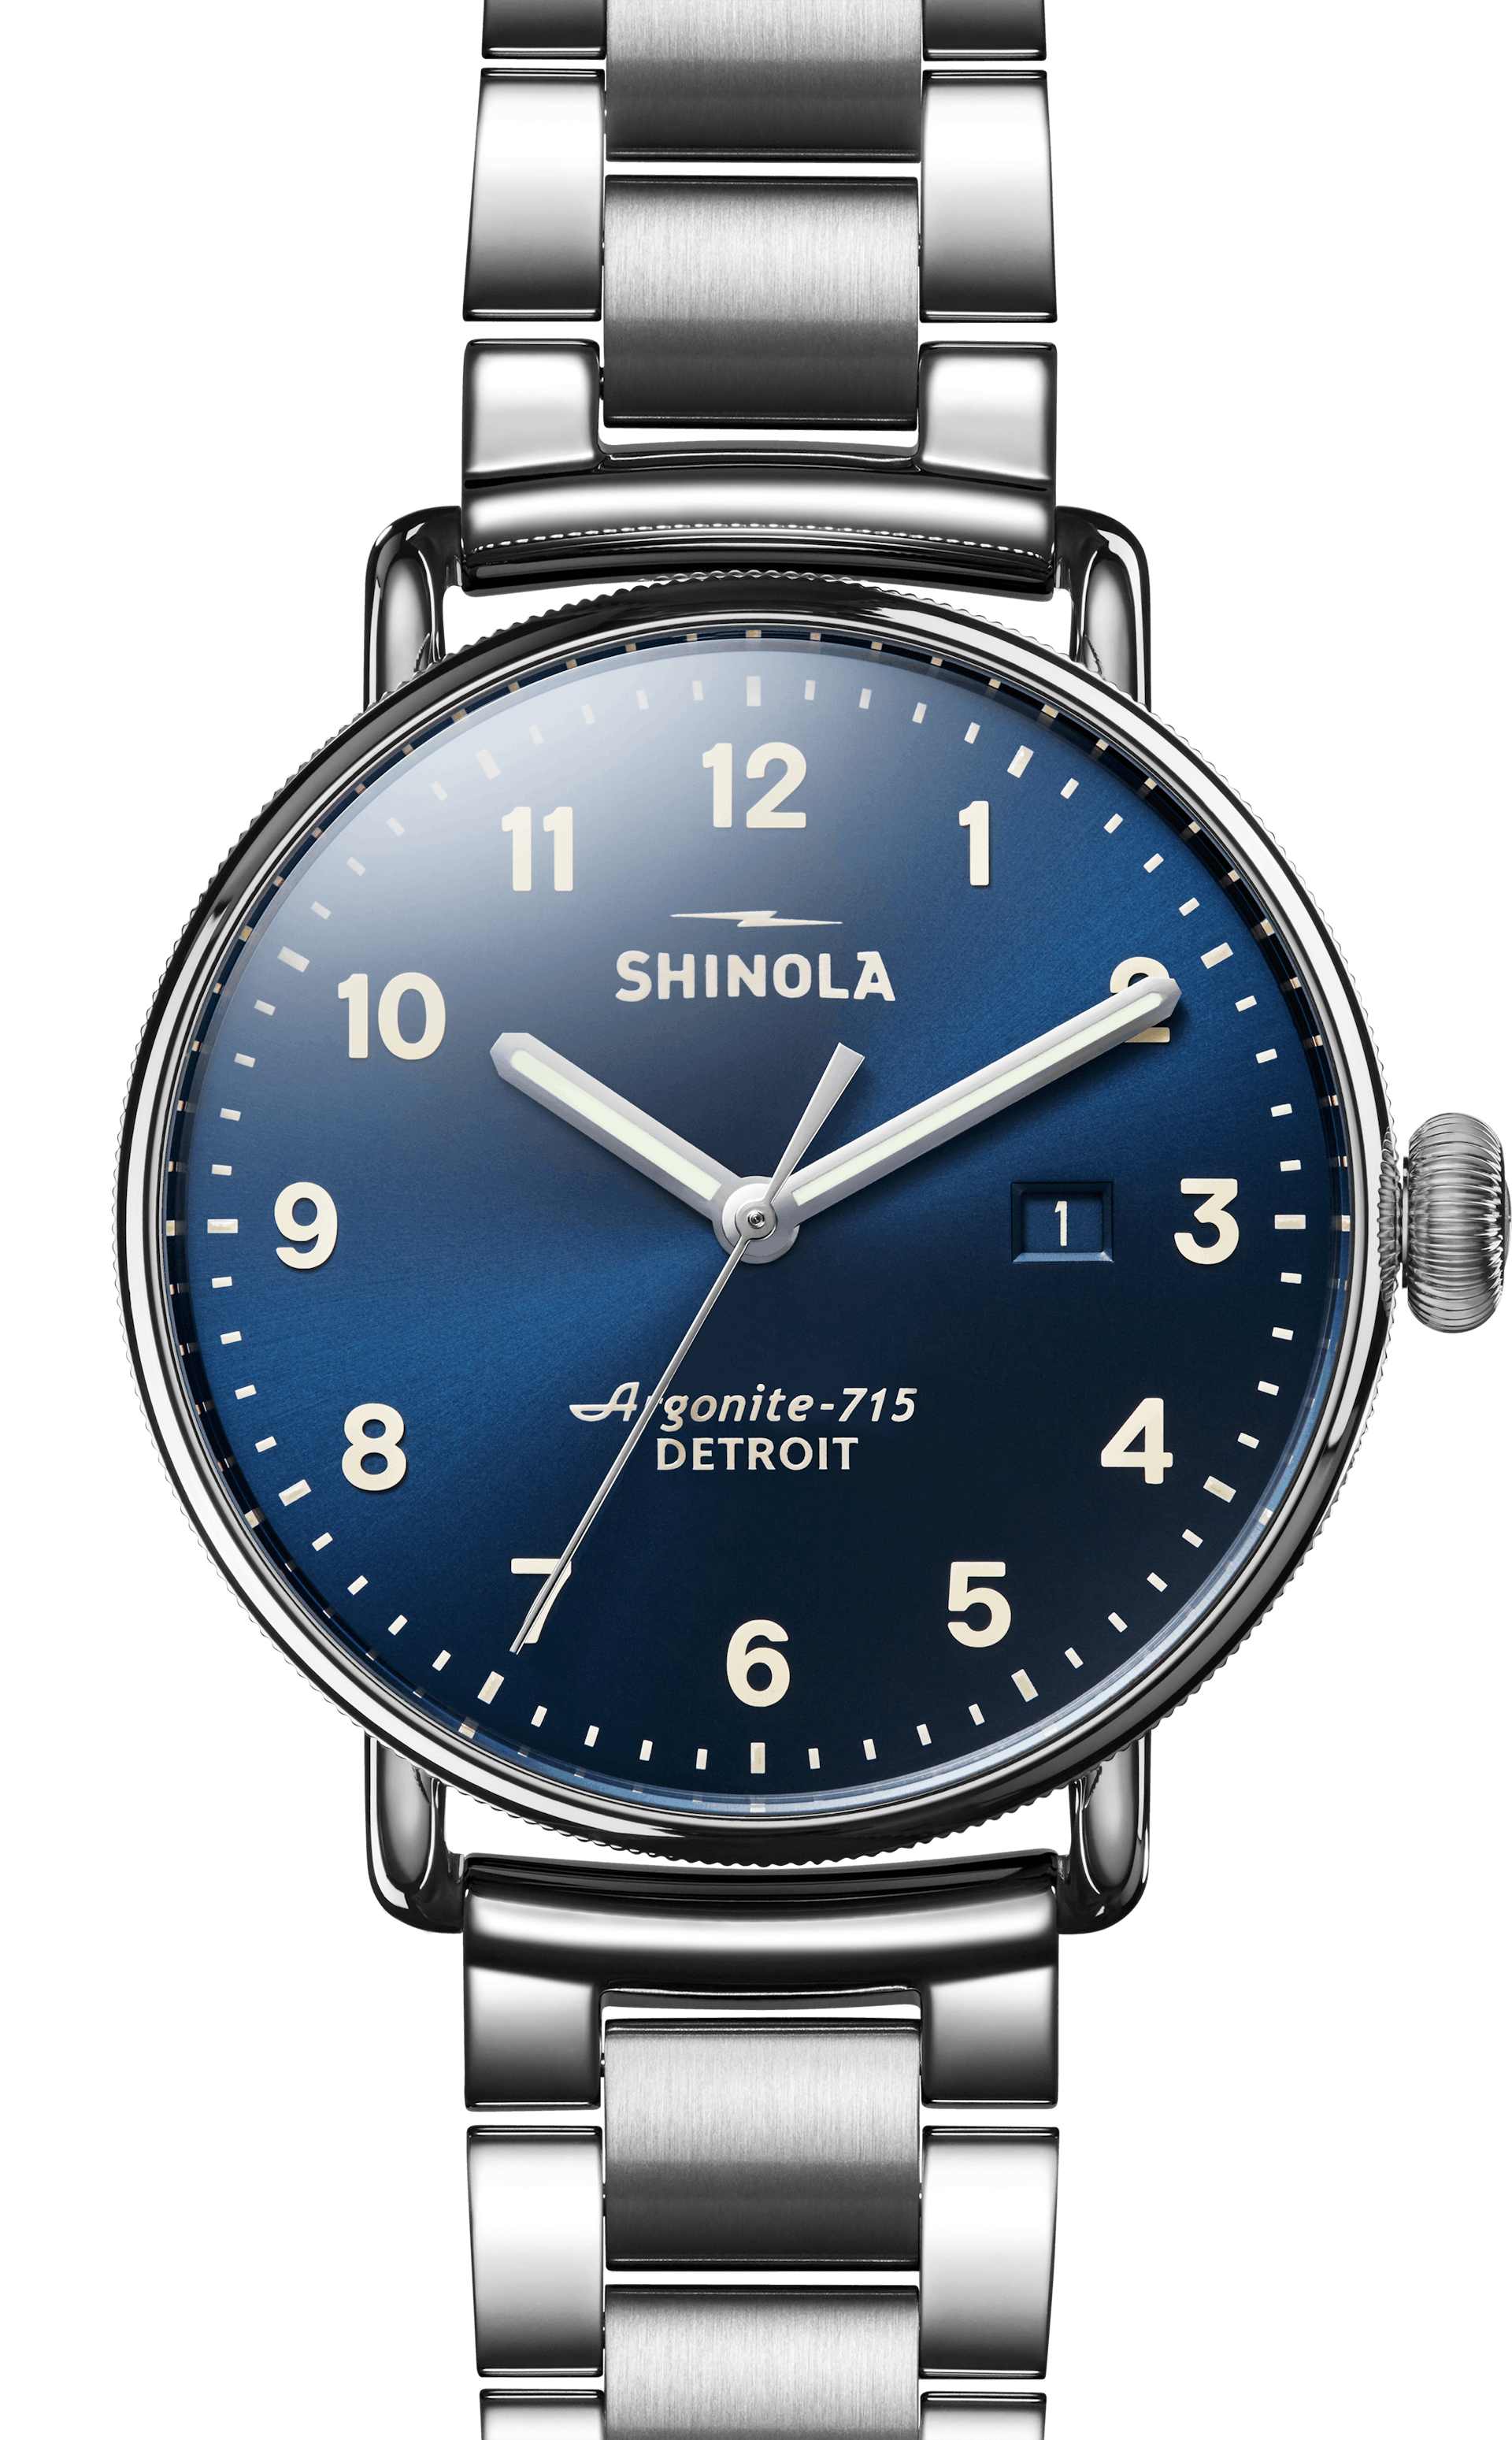 Shinola Debuts Its Most Complicated Watch To Date - JCK